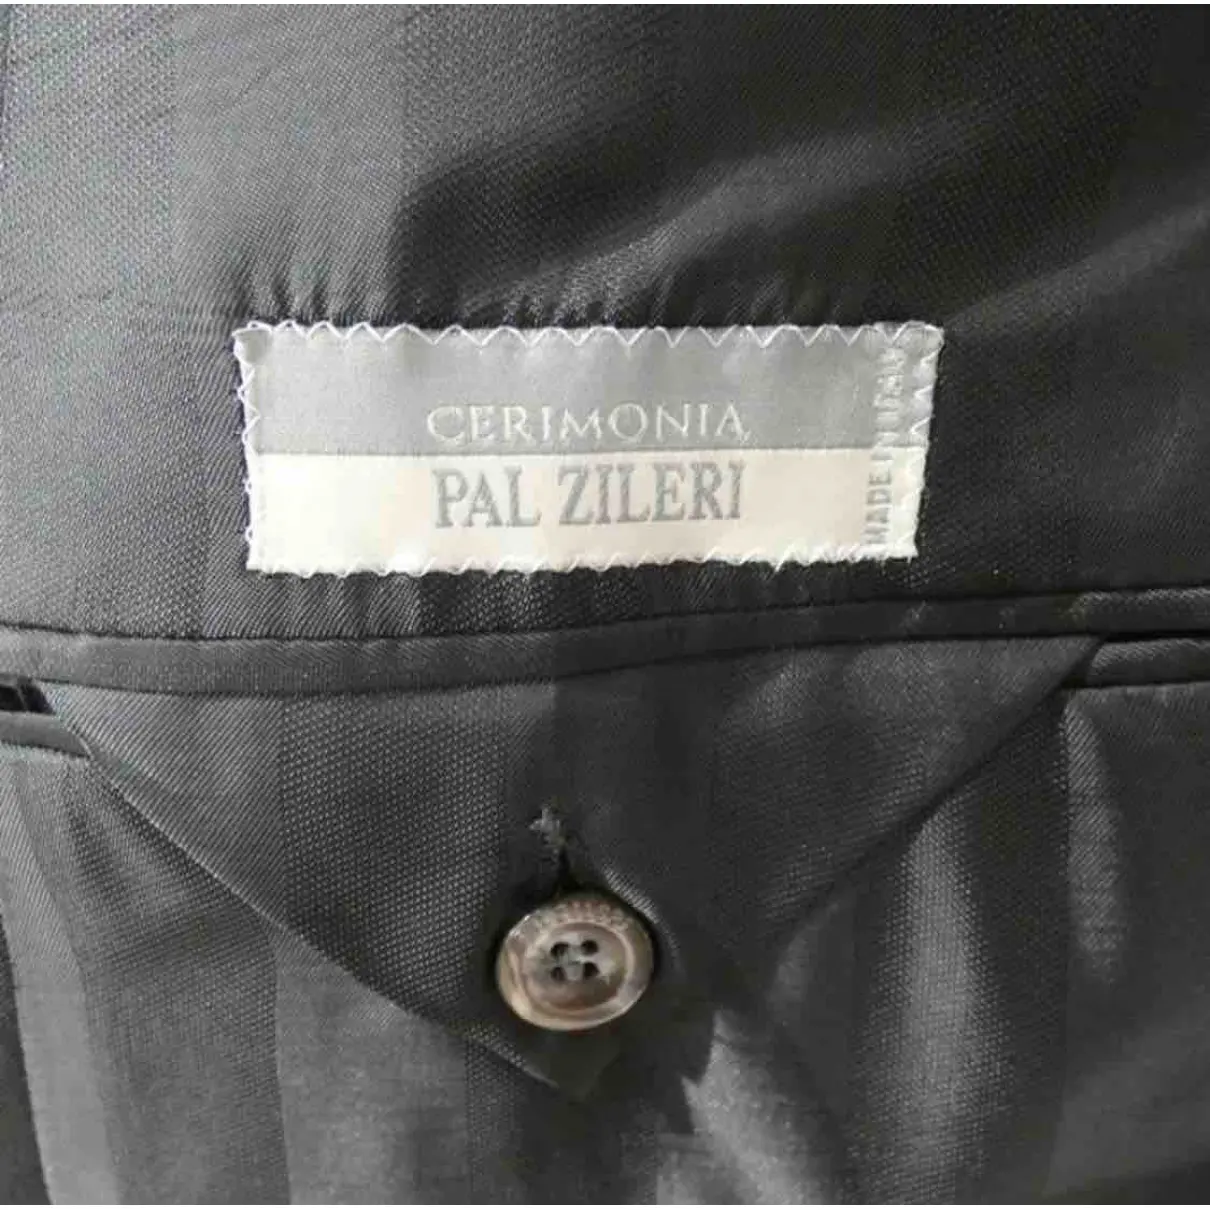 Wool suit Pal Zileri